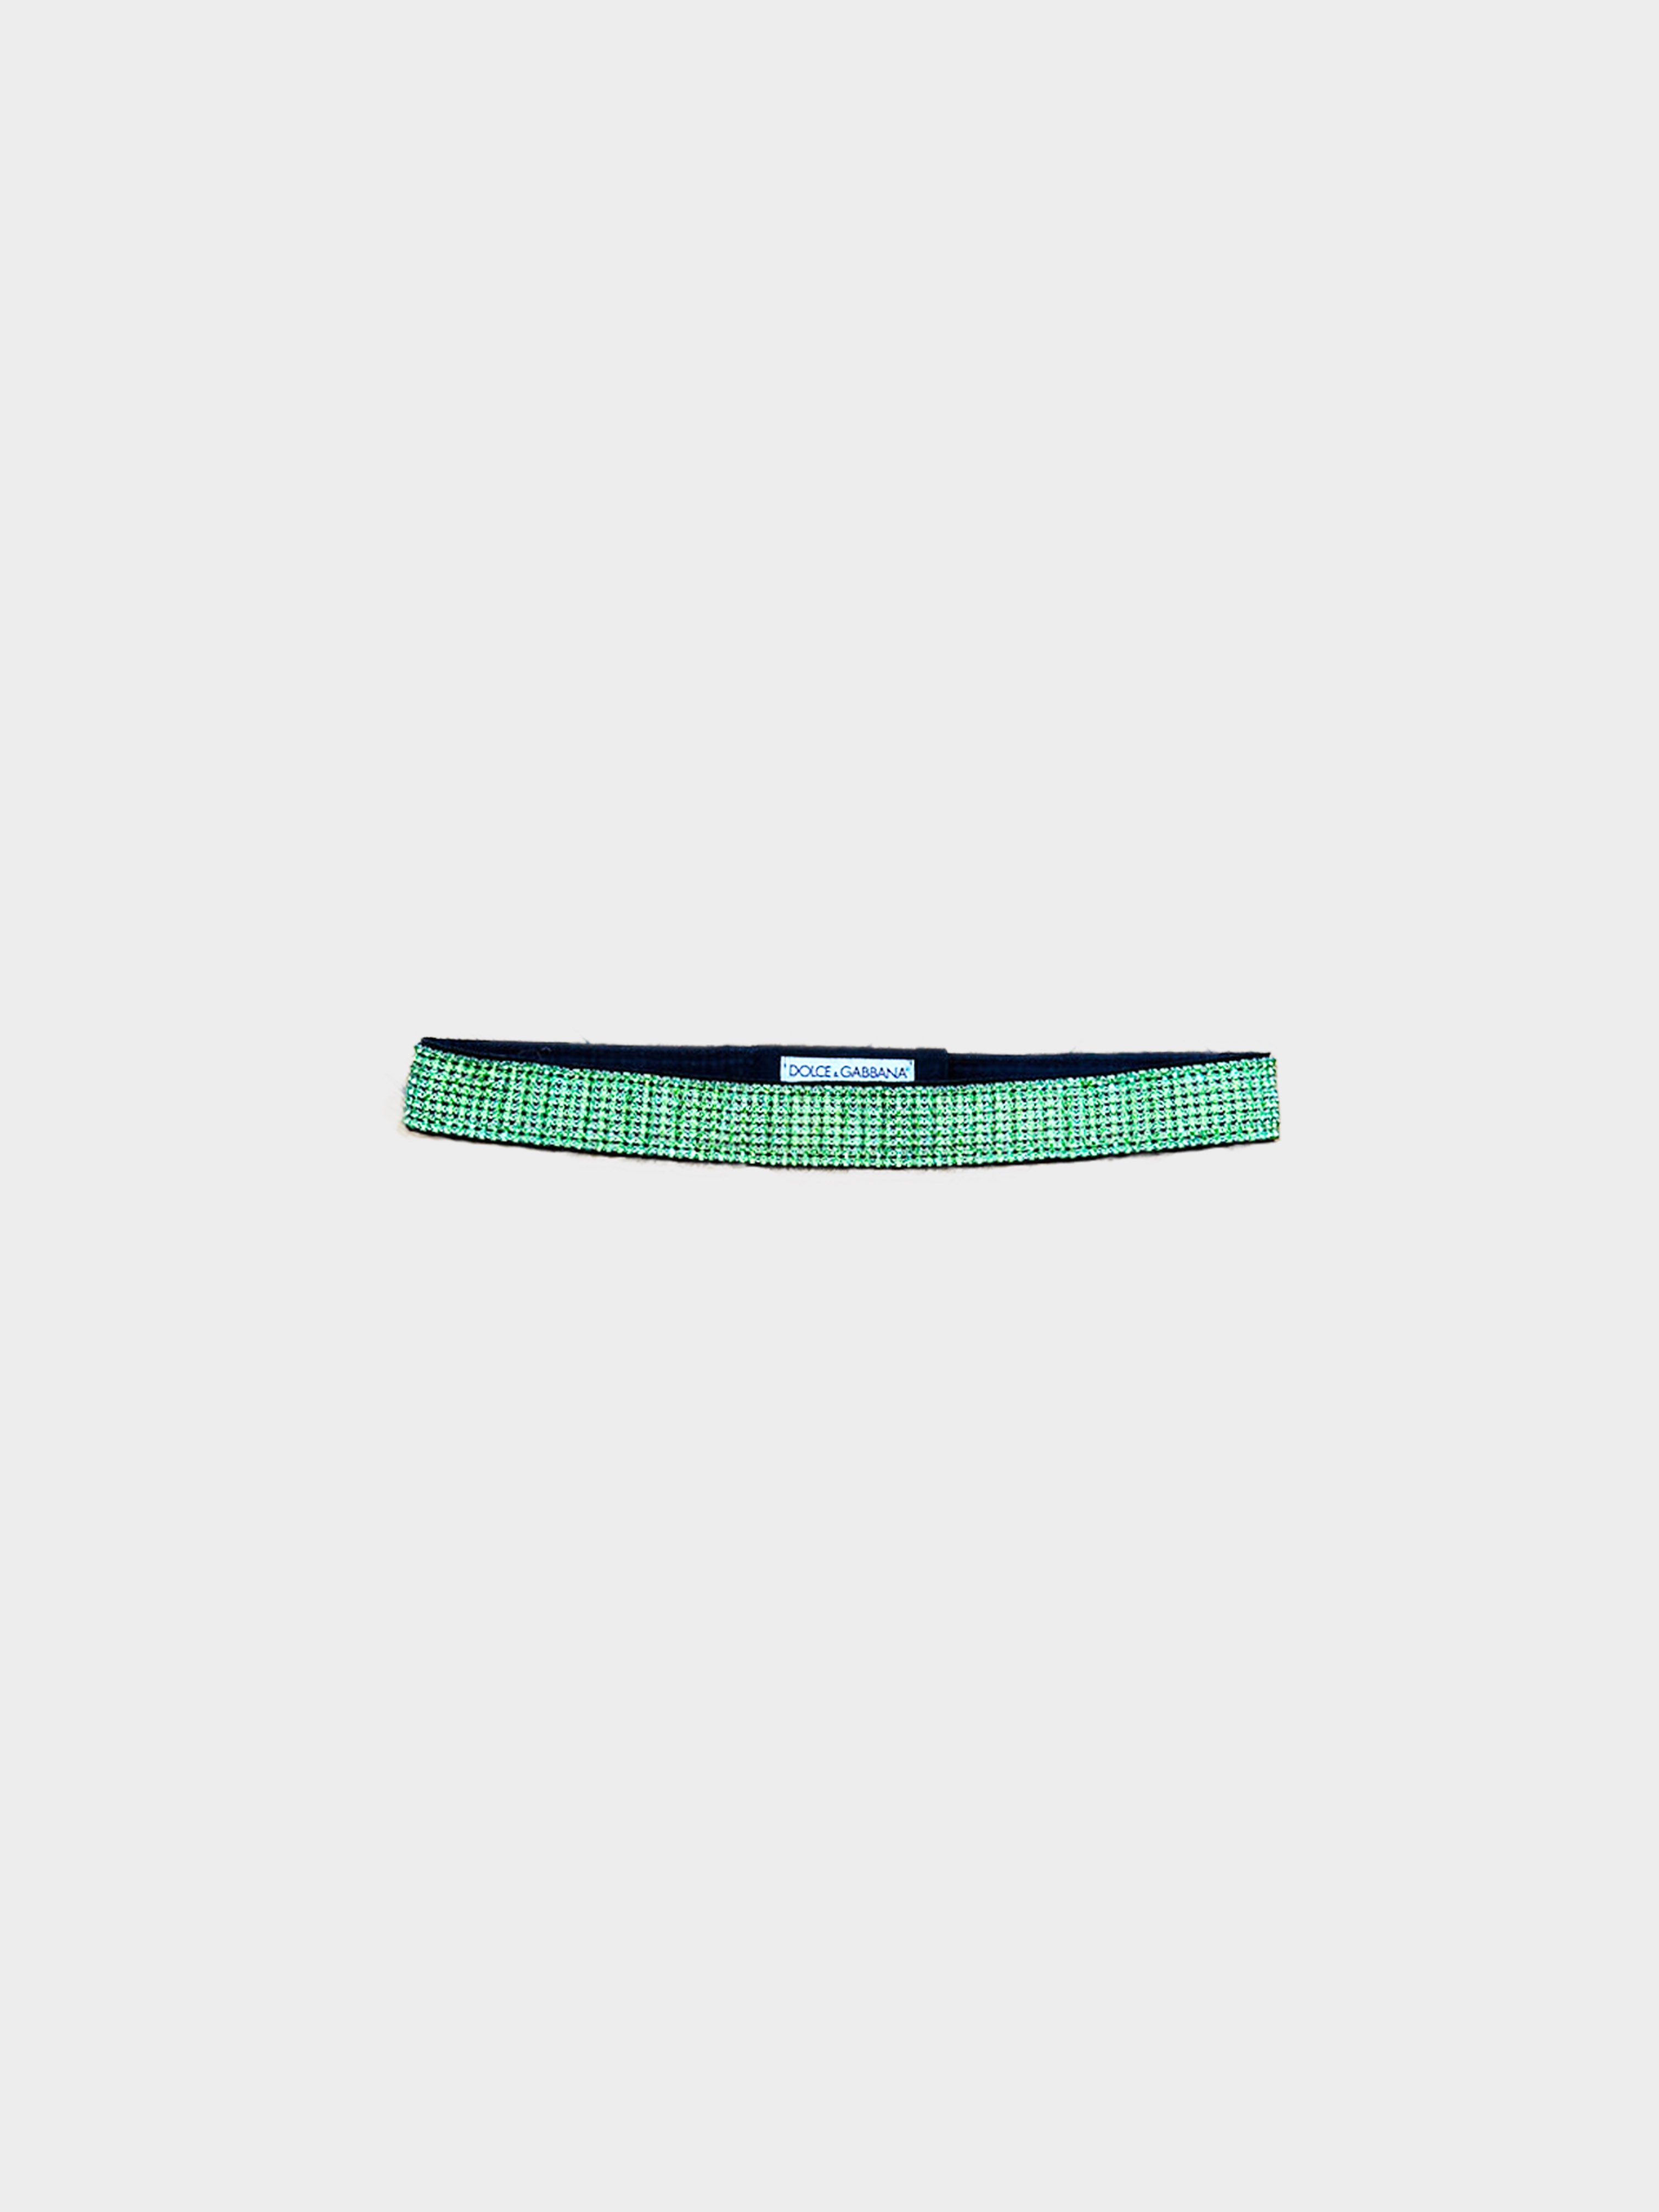 Dolce and Gabbana SS 2000 Green Swarovski Belt